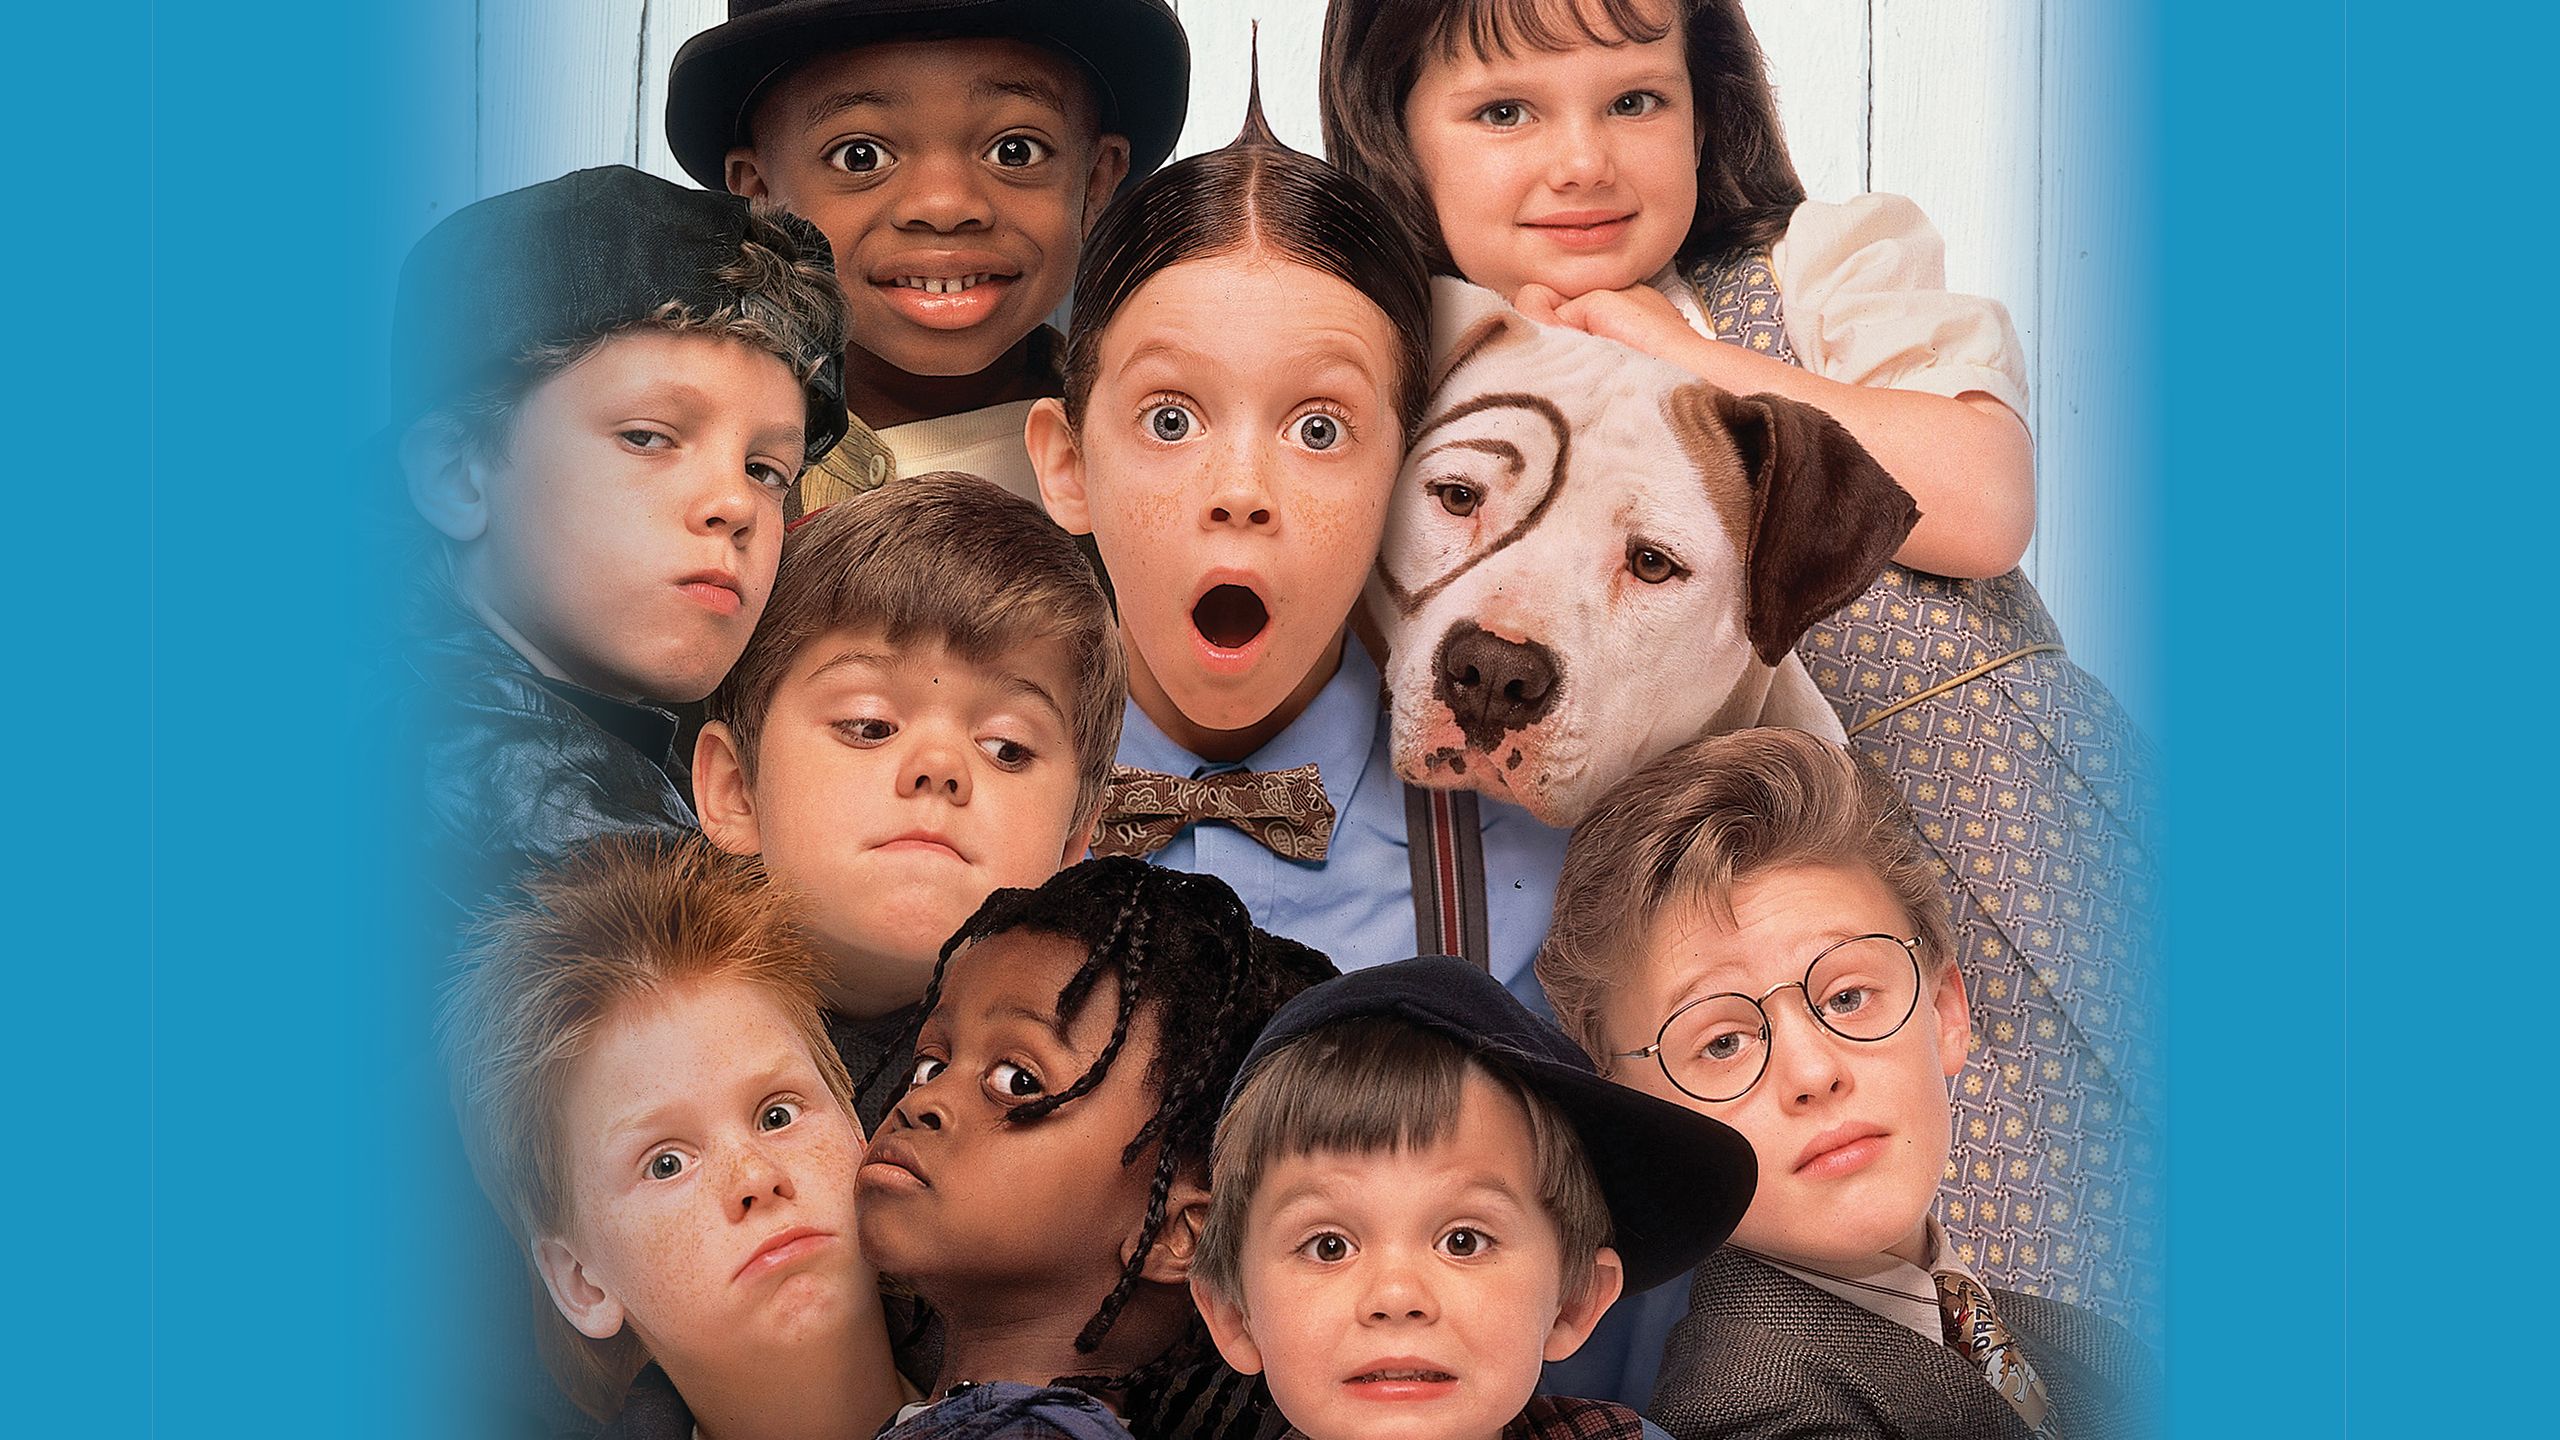 the little rascals full movie 1994